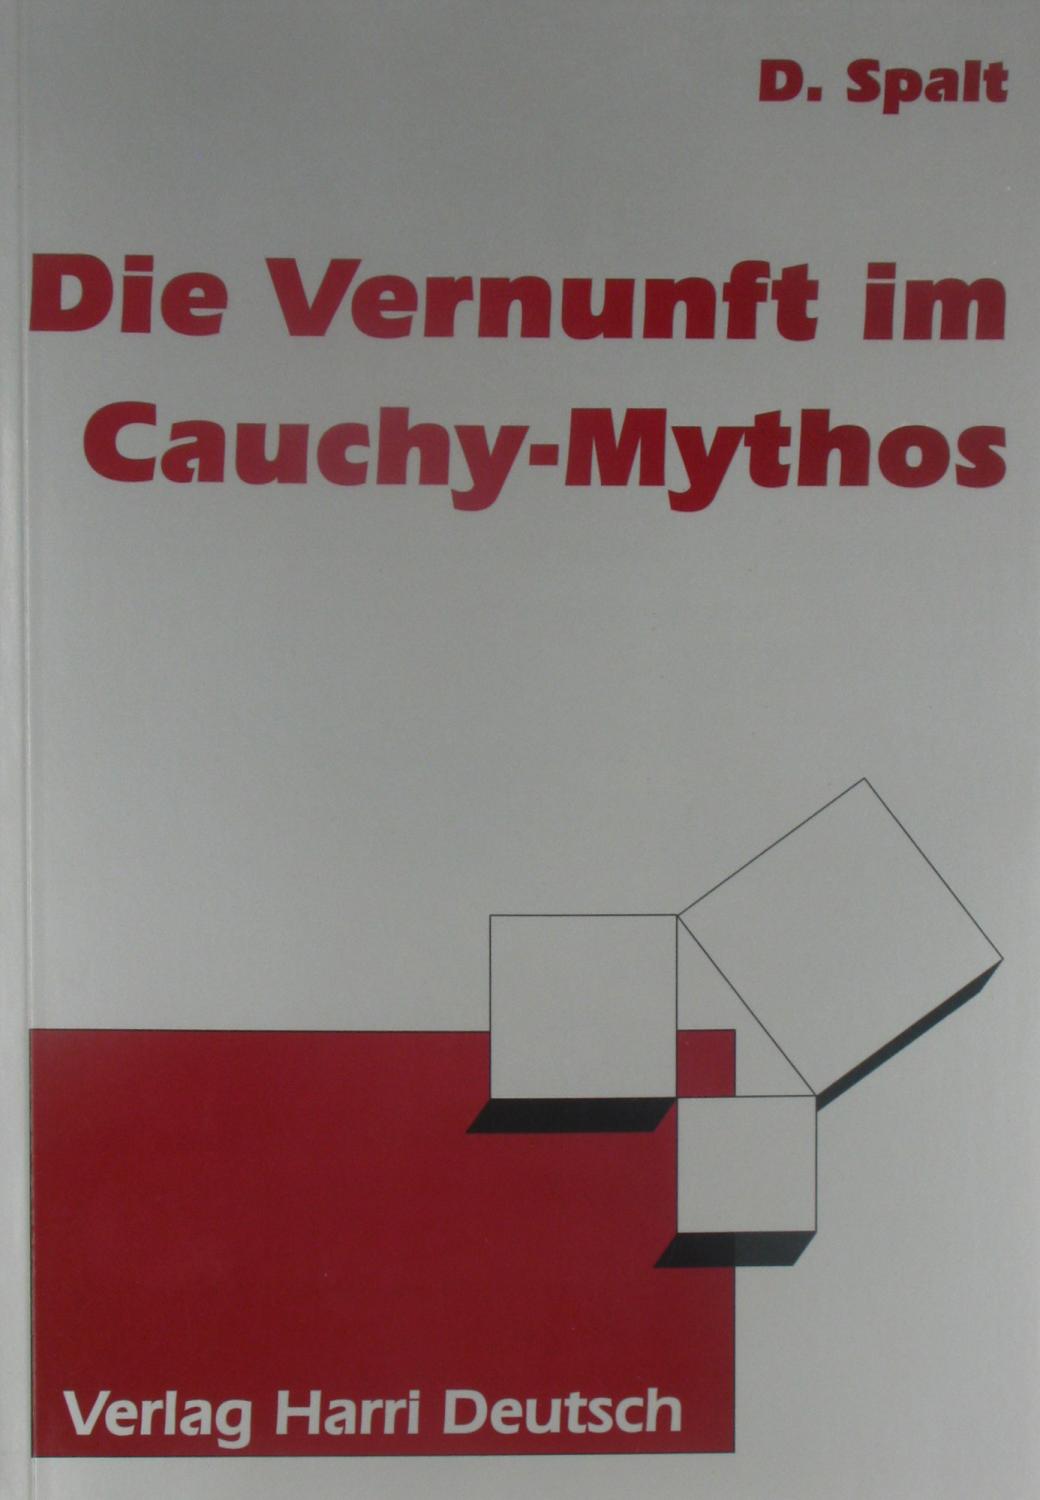 Die Vernunft im Cauchy-Mythos, - Spalt, Detlef D.